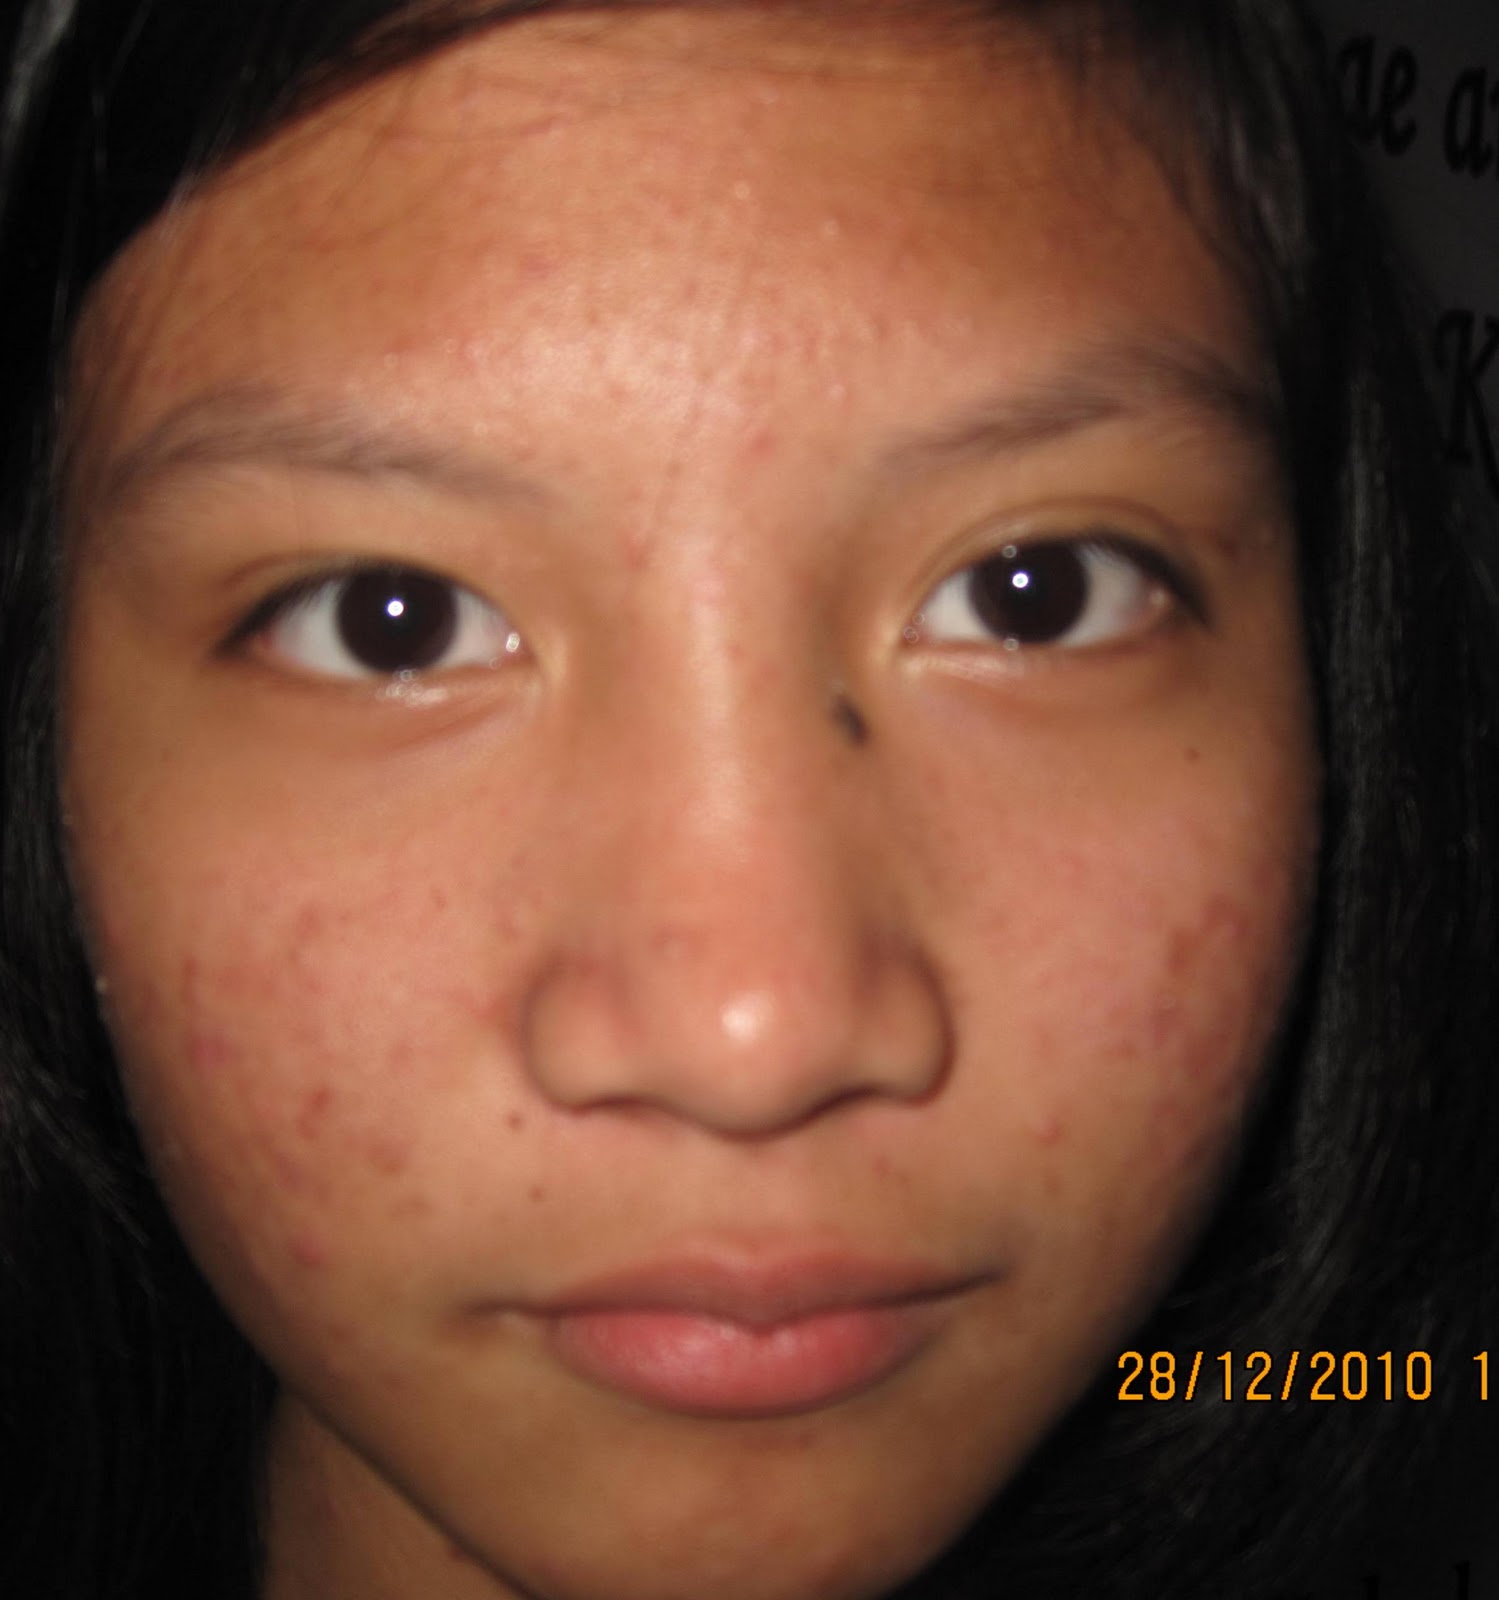 grade 3 acne